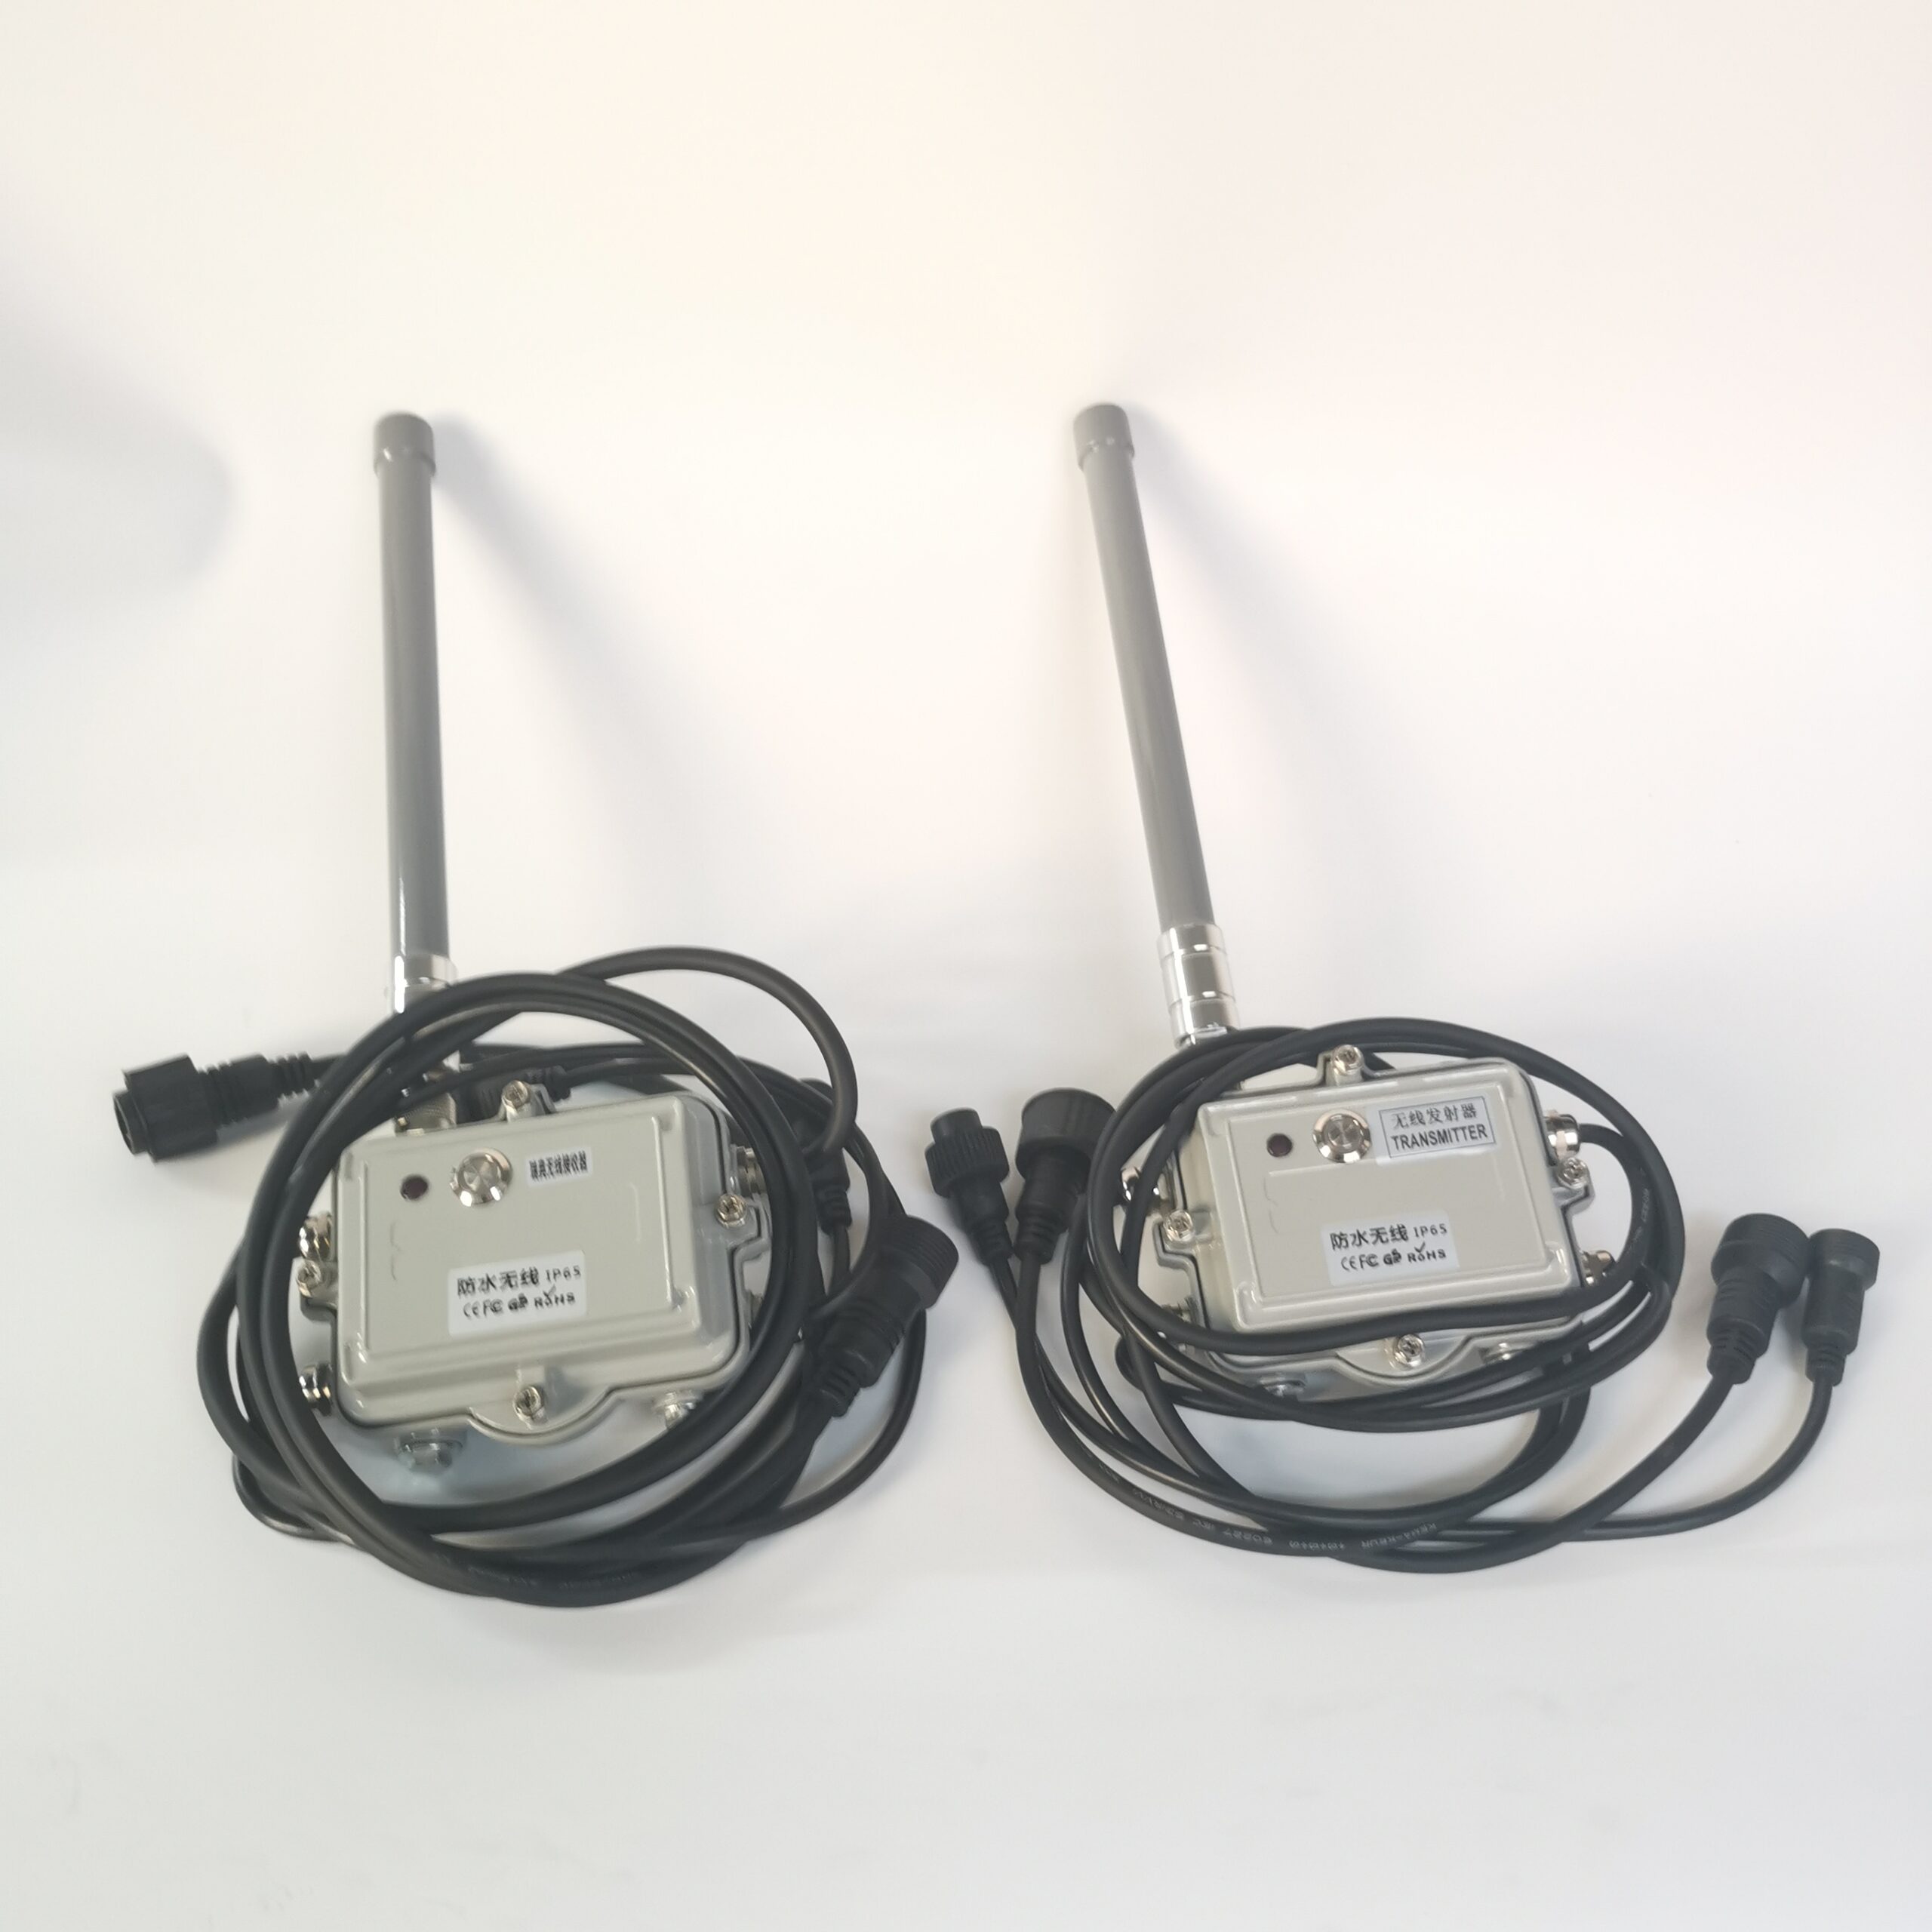 Sweden chip indoor waterproof DMX512 wireless transmitter No delay (2.4G/5.8G dual frequency ) - Dmx controller - 5